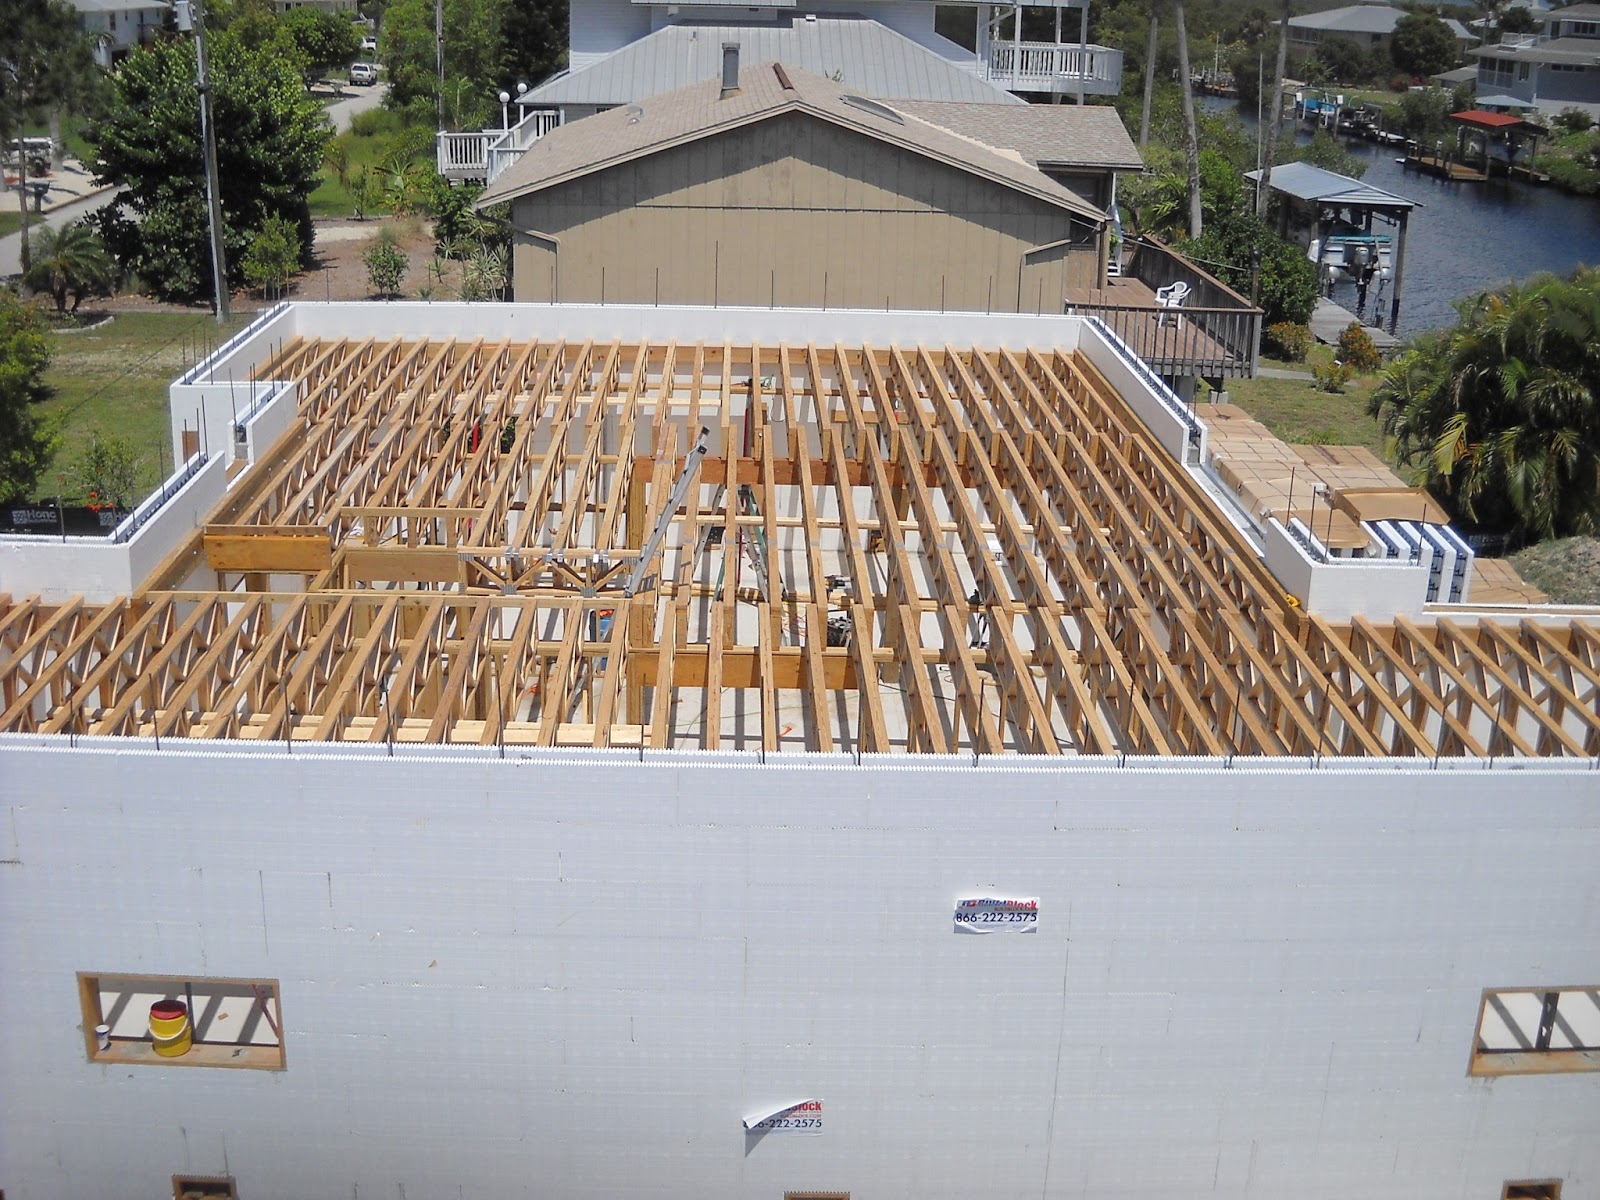 Pine Island Home Builder: Building ICF - Insulated Concrete Form